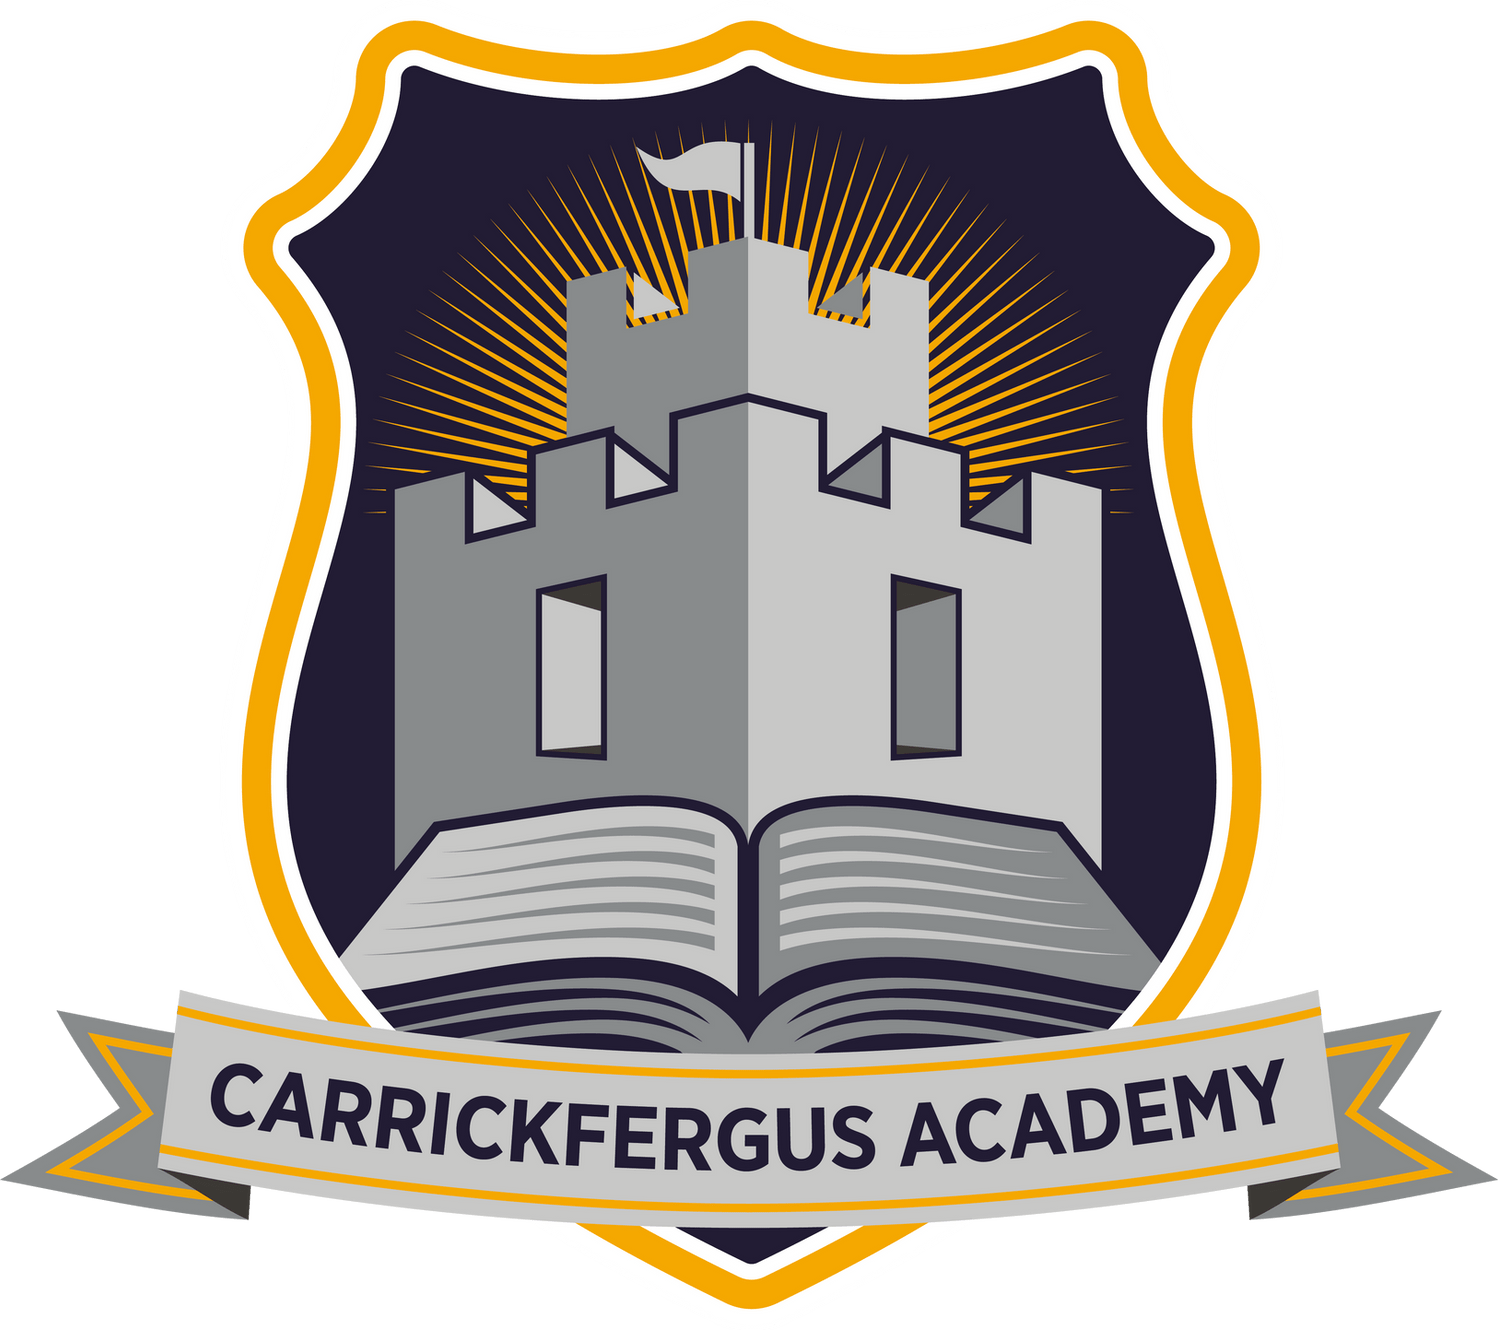 Carrickfergus Academy